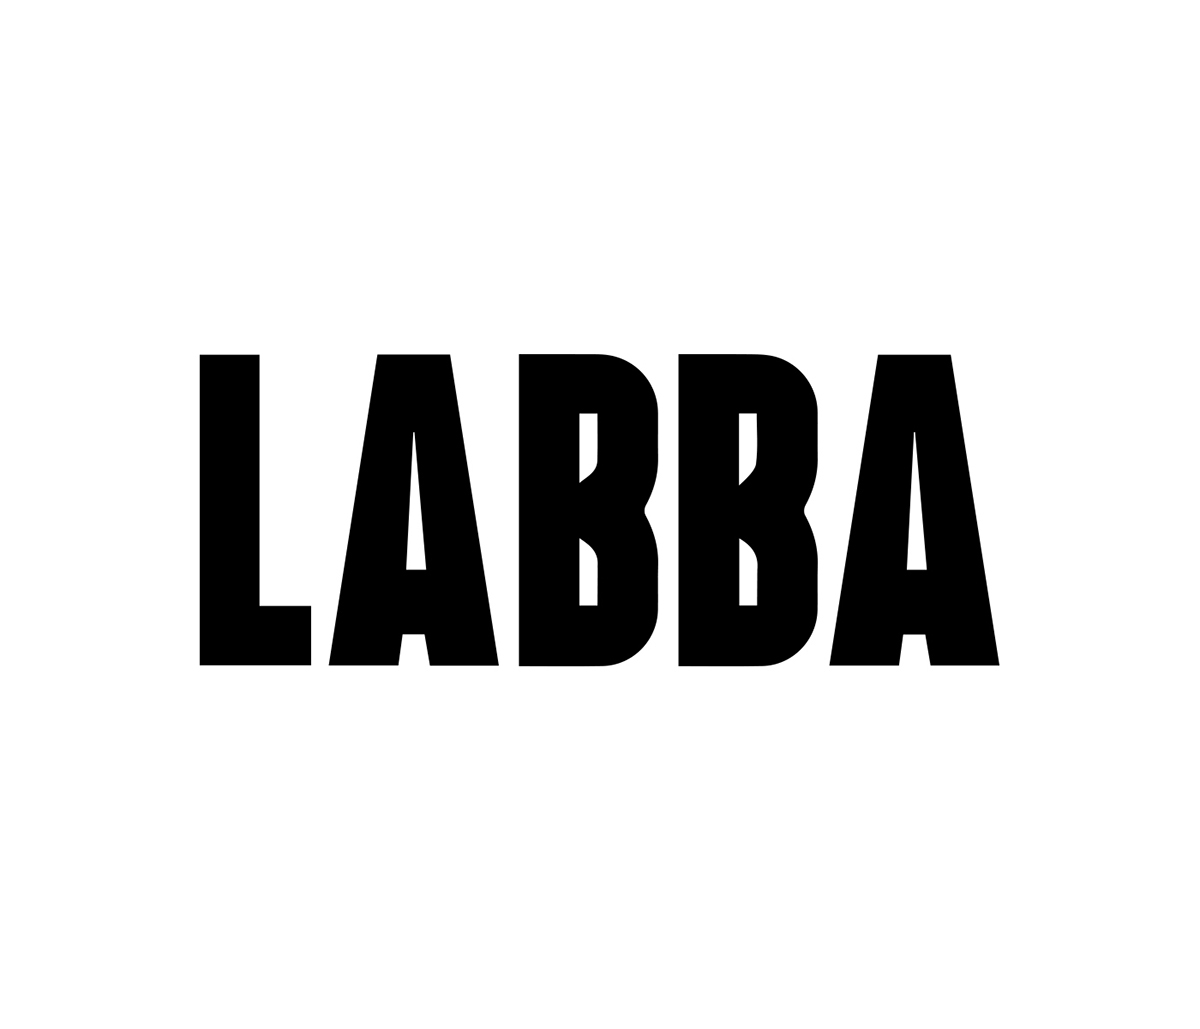 Labba rebel music logo Logo Design Brooklyn nyc